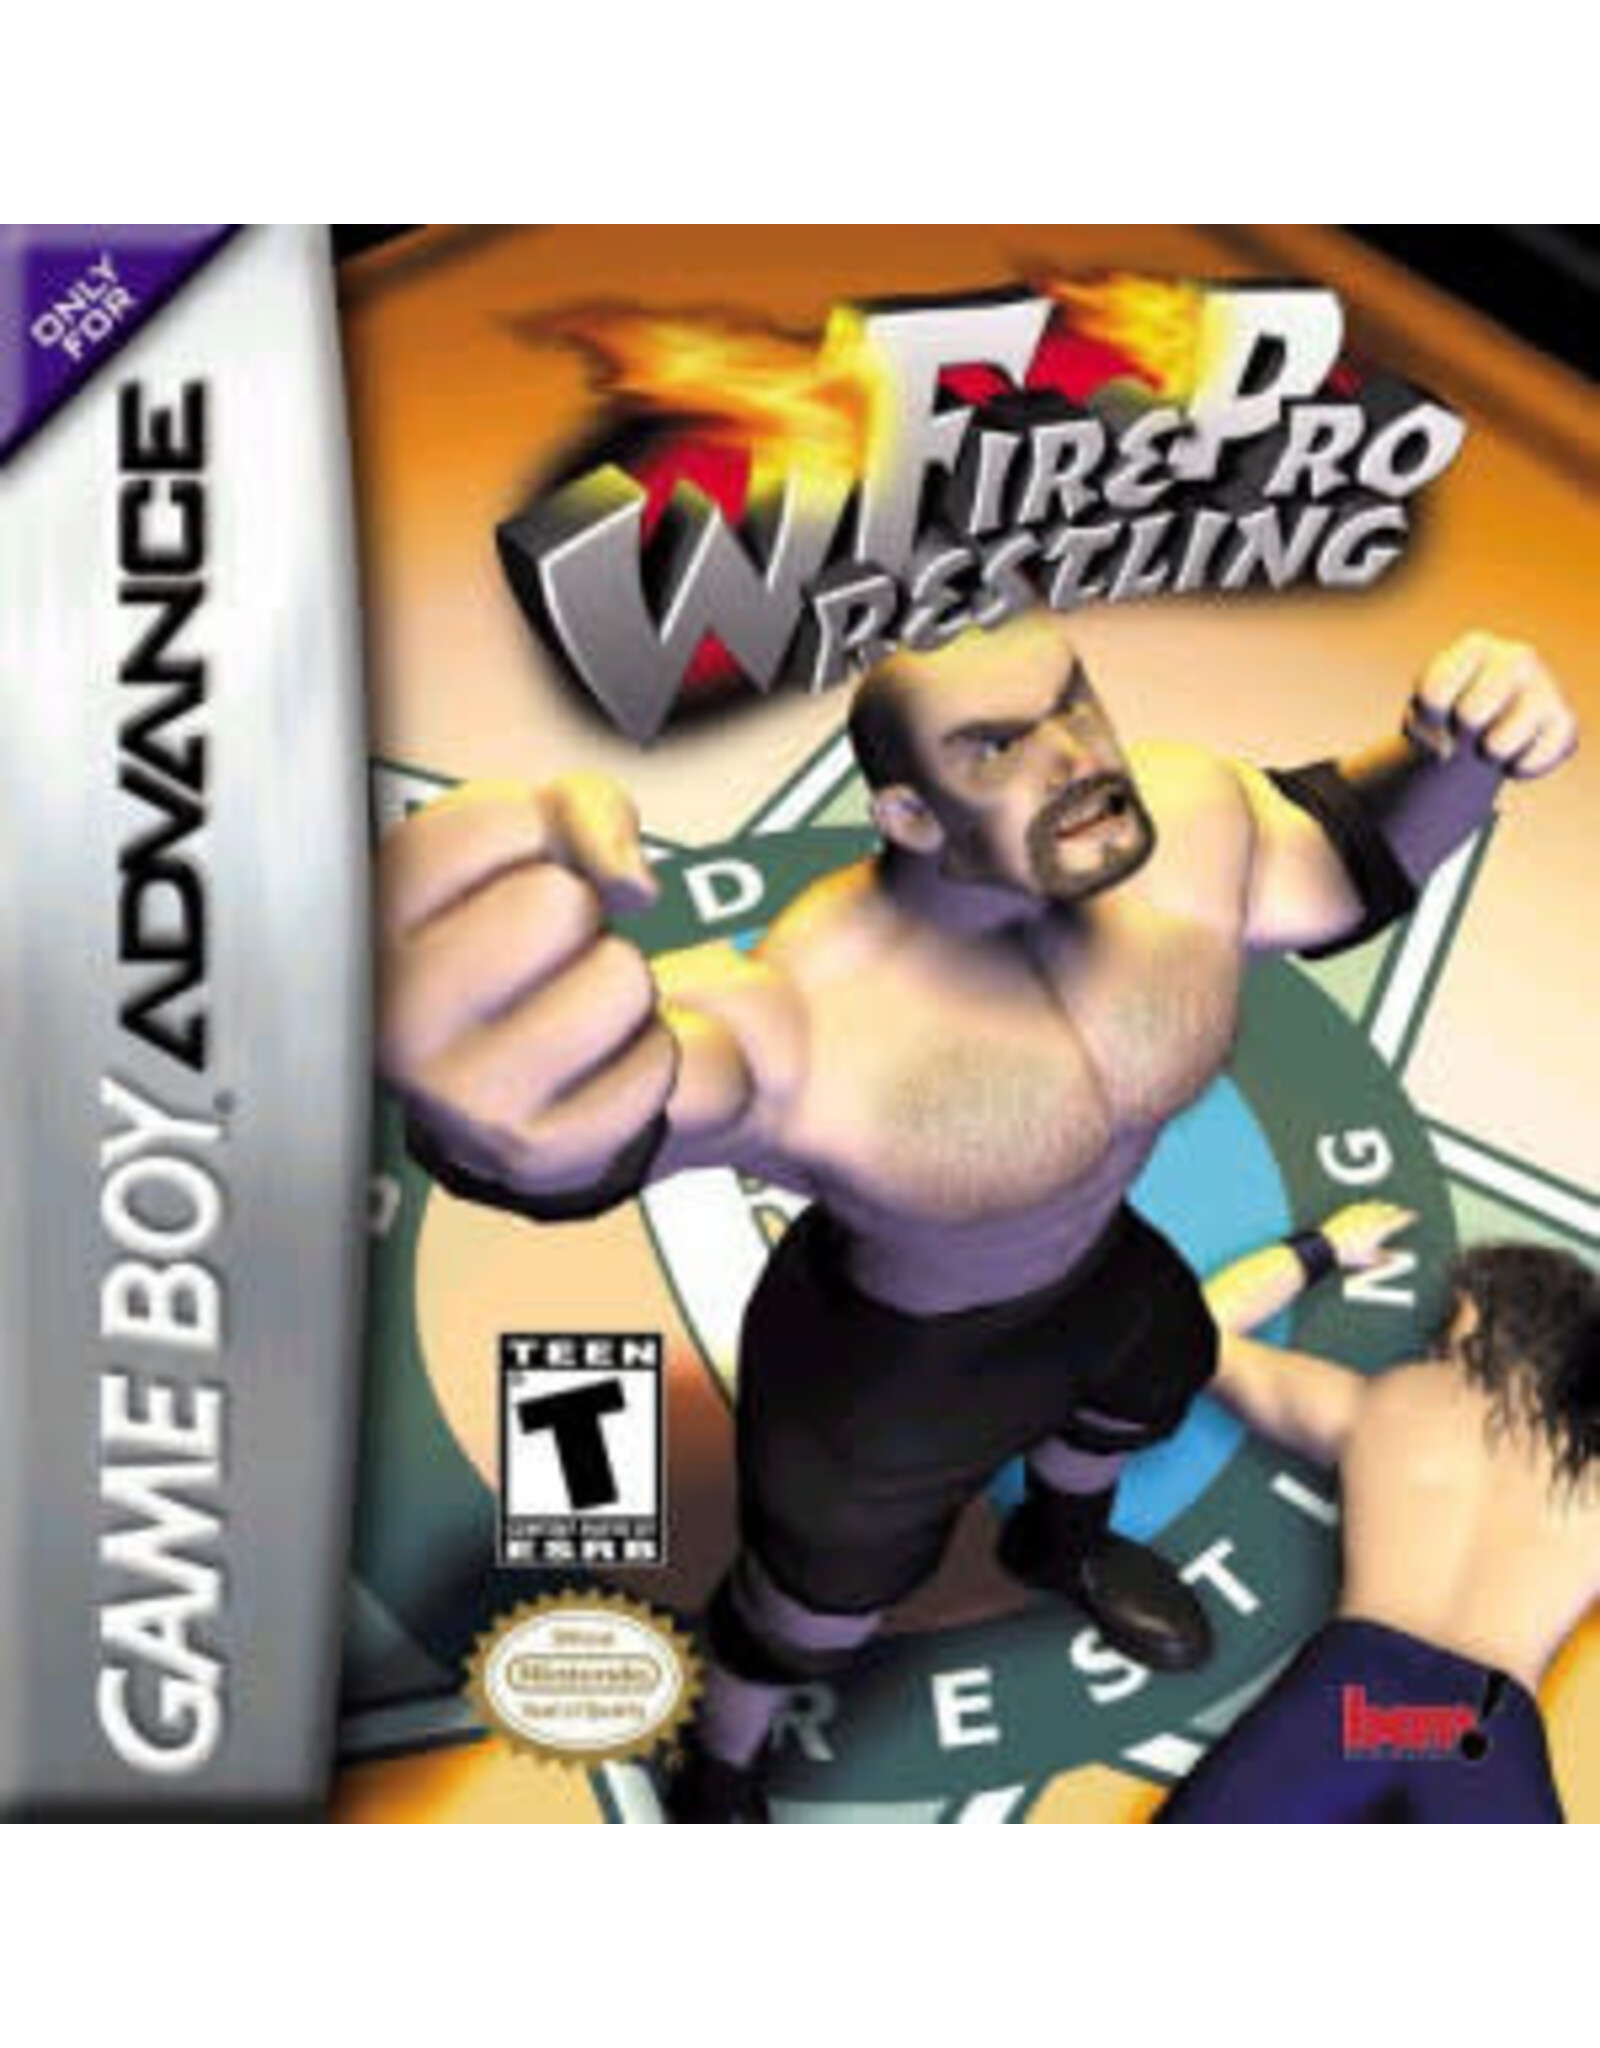 Game Boy Advance Fire Pro Wrestling (CiB)